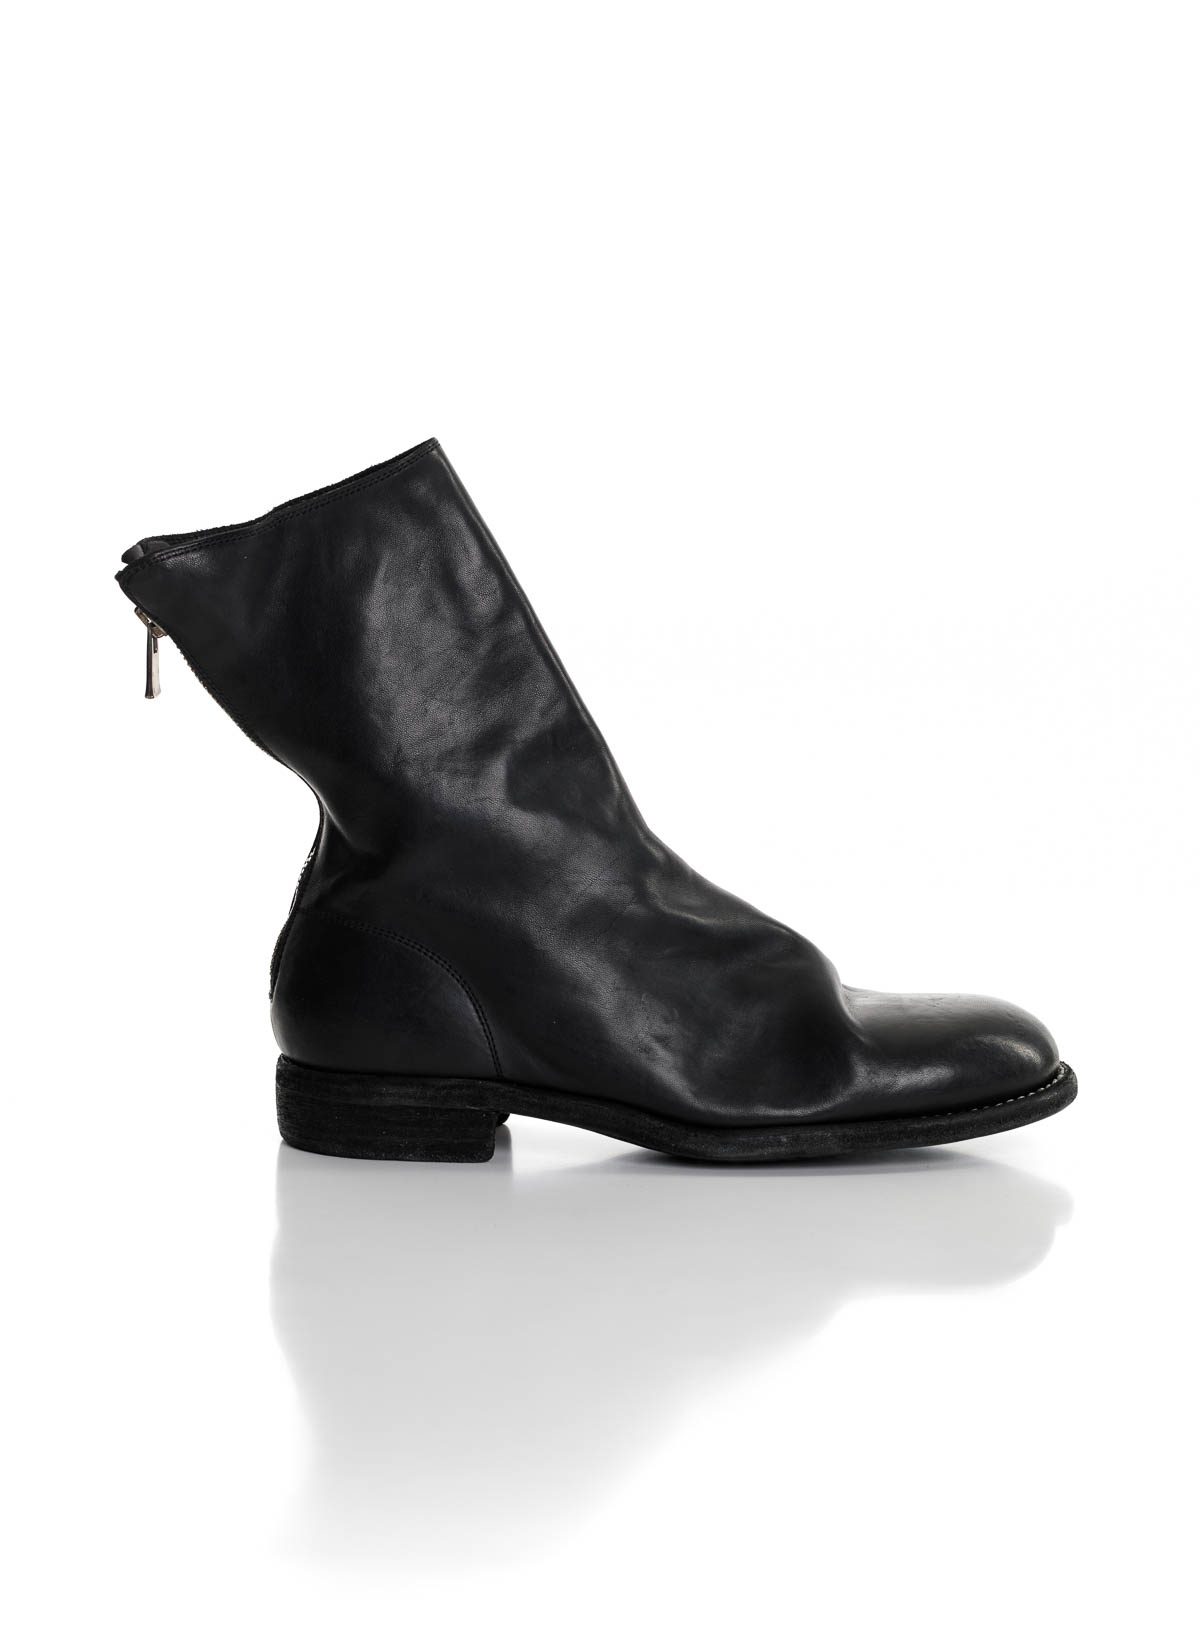 hide-m | GUIDI Men 988 Back Zip Boot, black horse leather